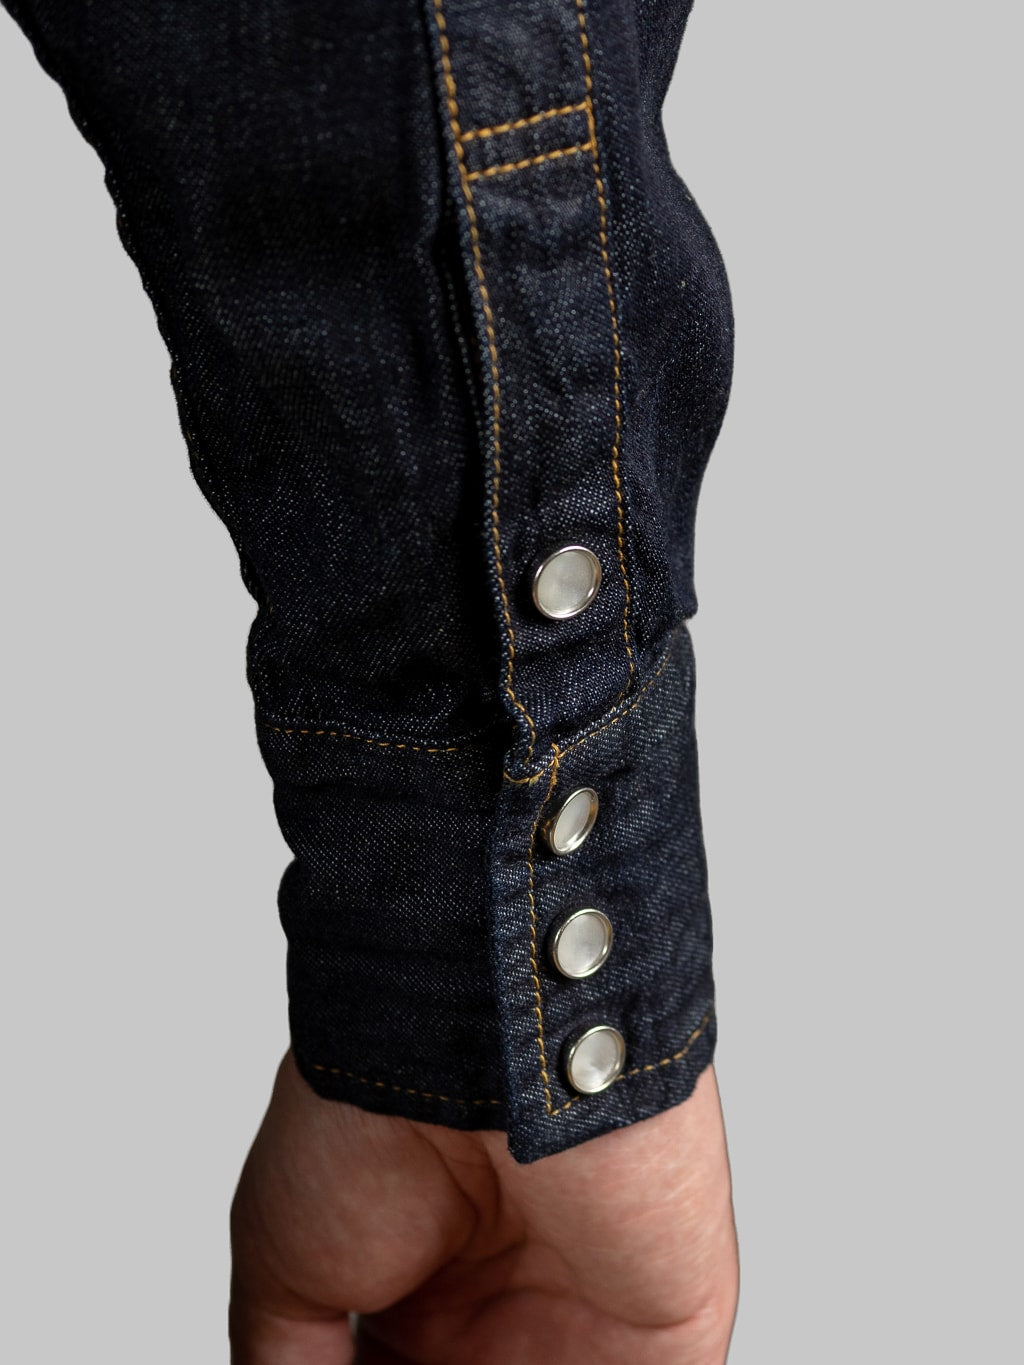 tcb jeans ranchman selvedge denim shirt snap buttons